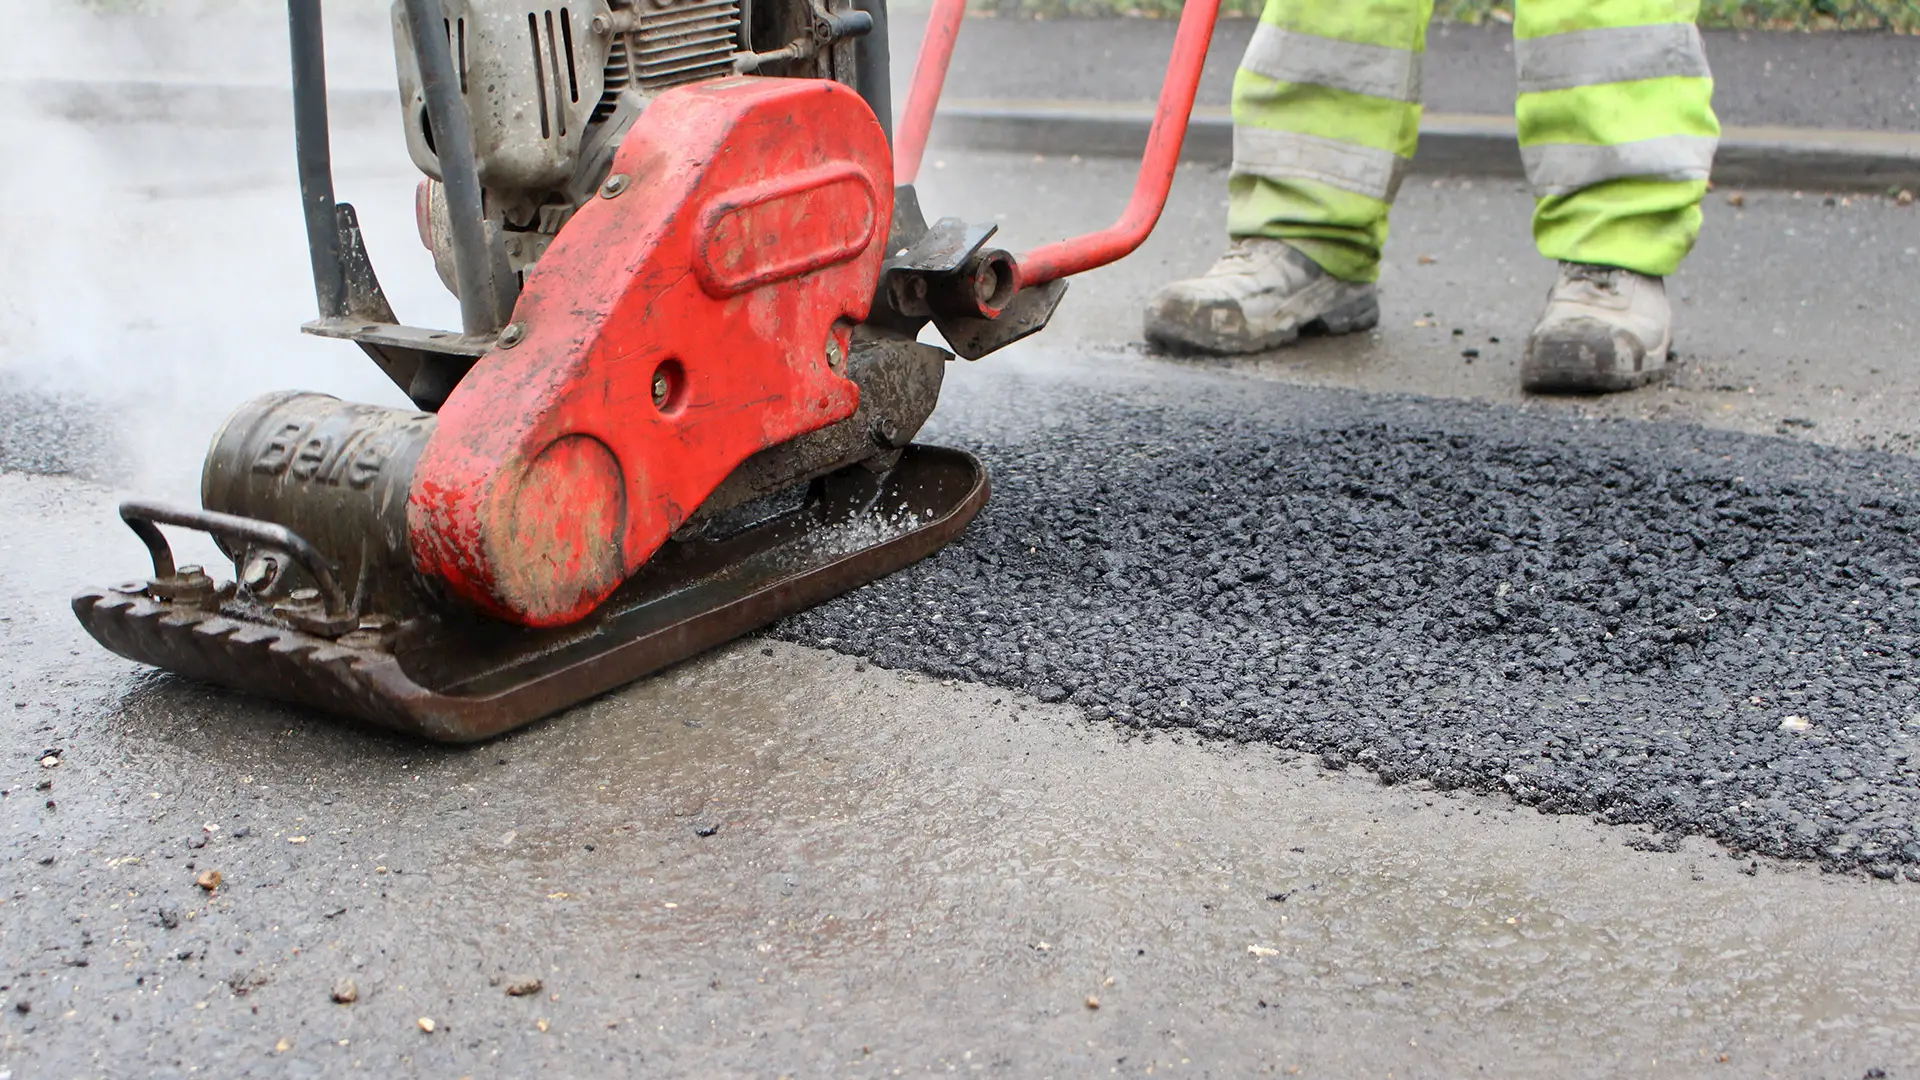 Experienced pothole repair contractors in Kettering